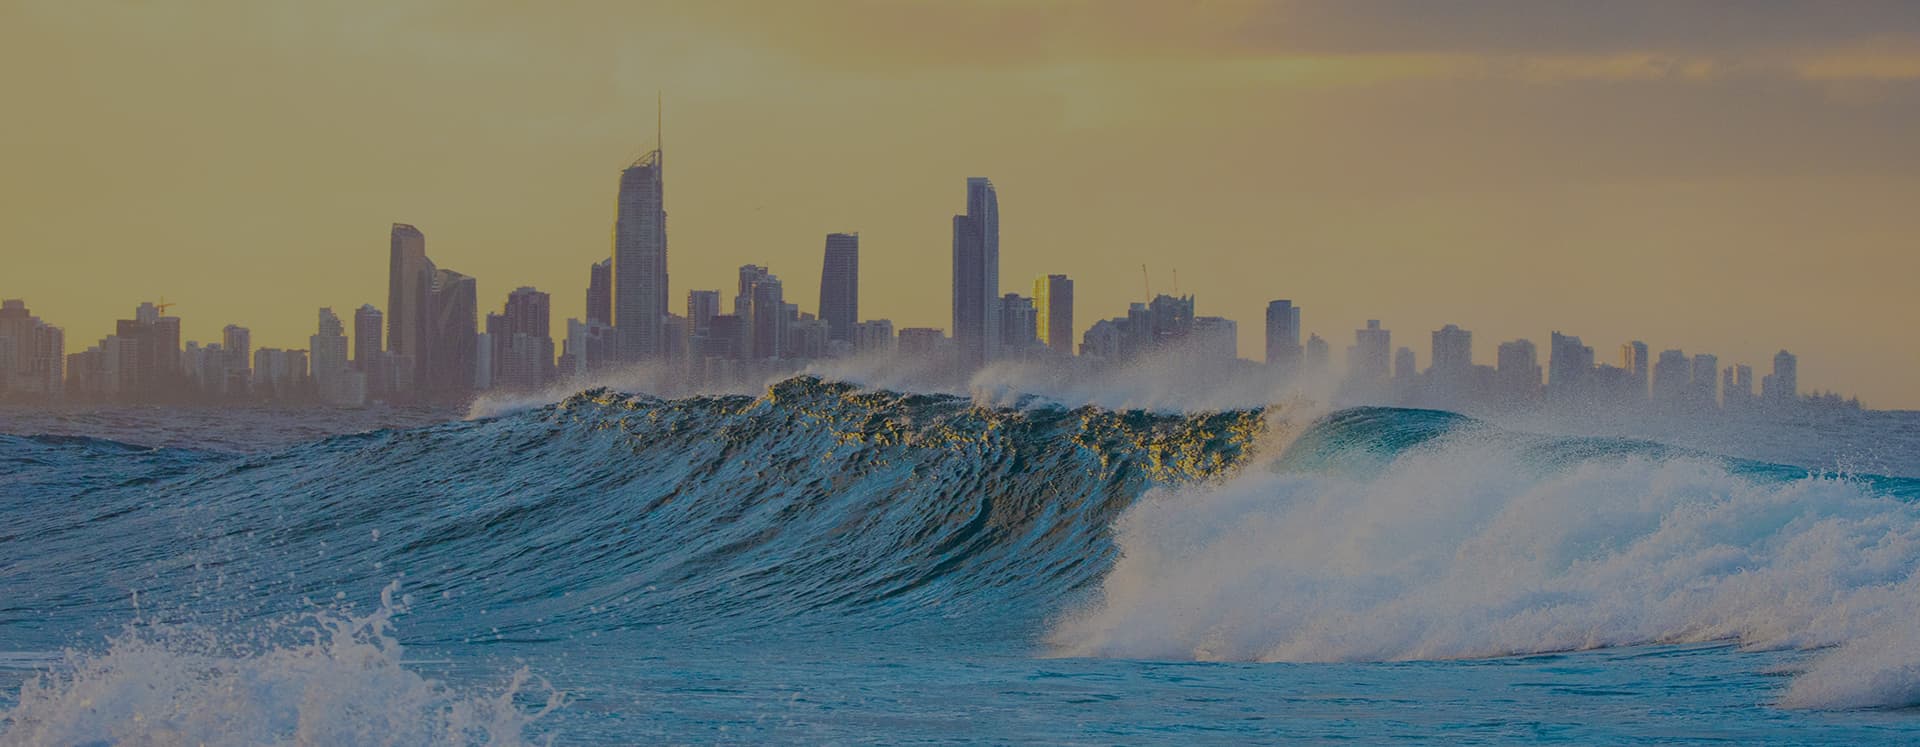 Estudiar surf en Gold Coast Australia